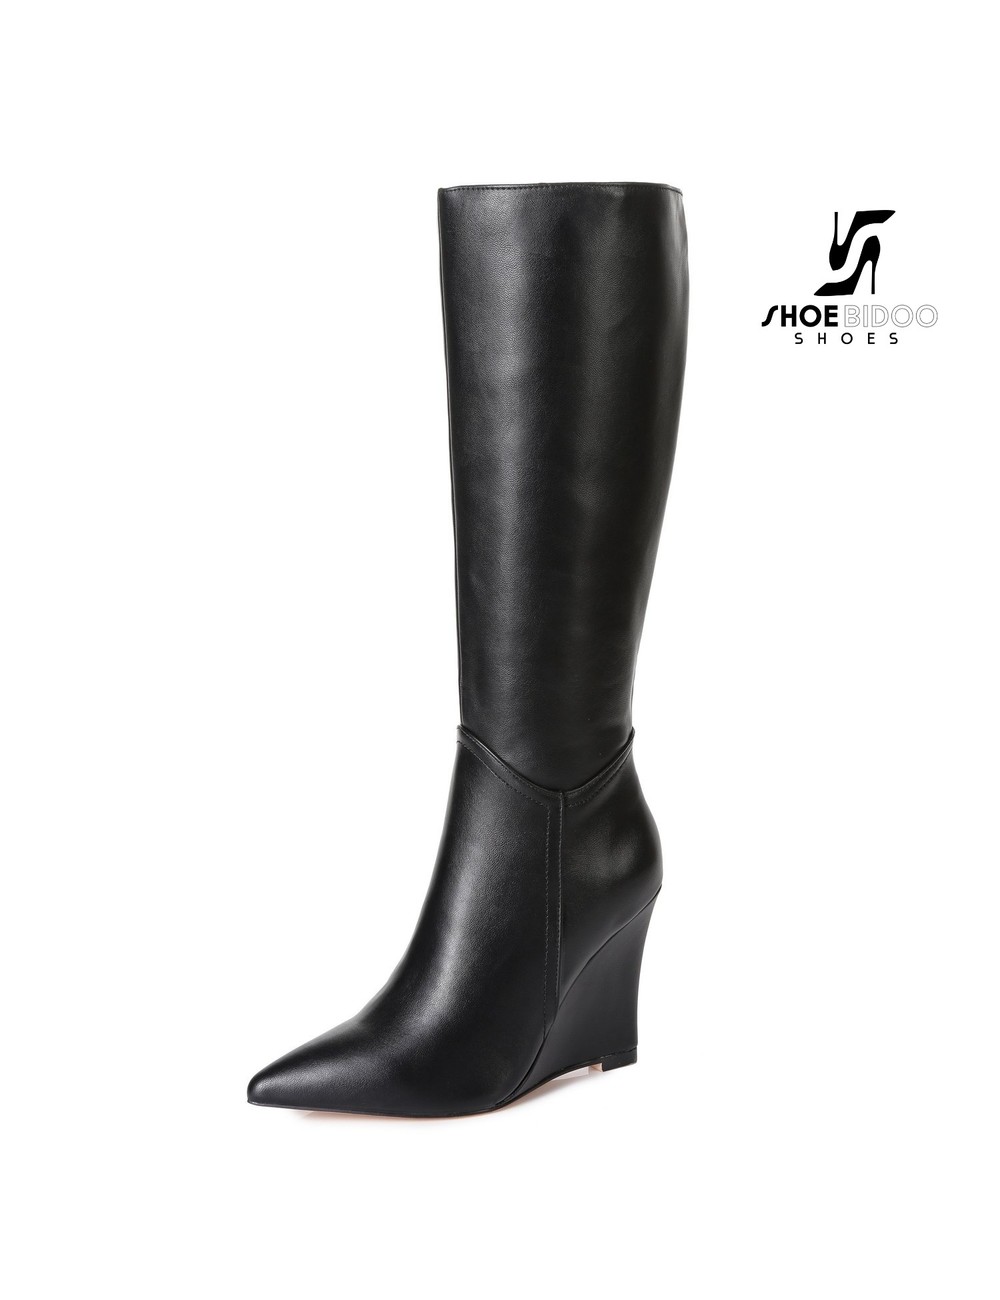 Giaro Giaro knee boots with wedge heel ELLA in black